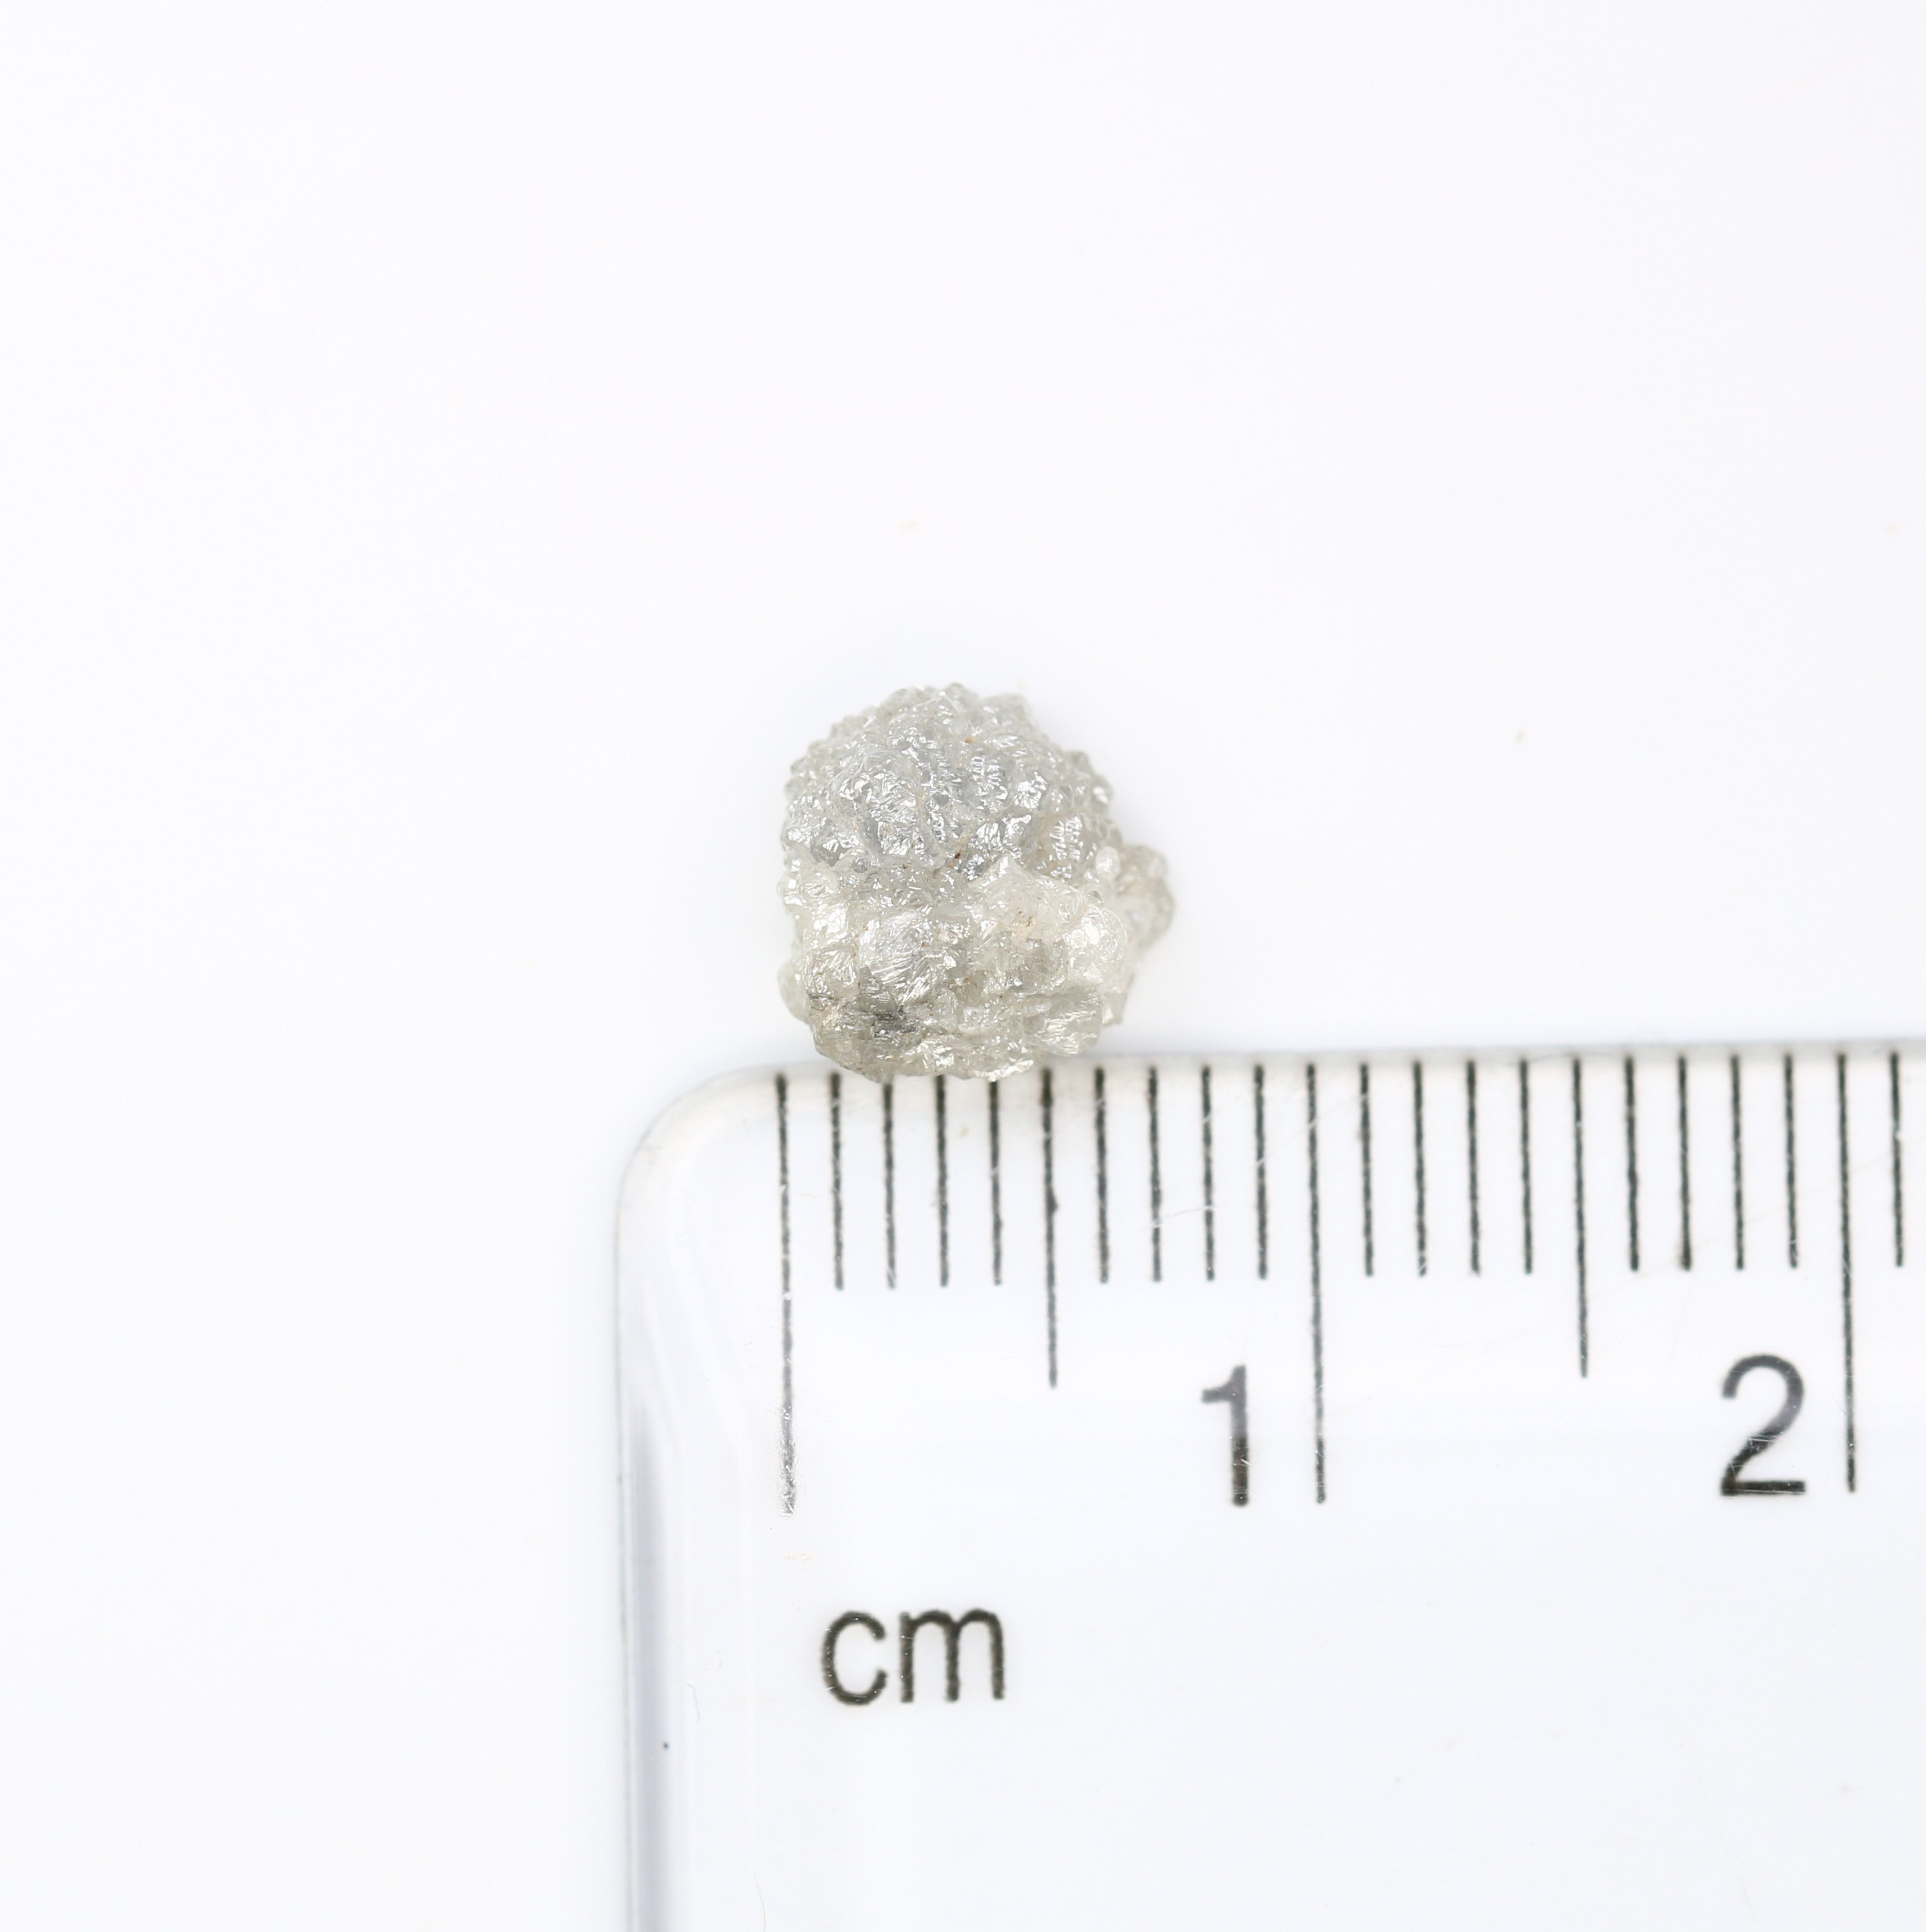 1.86 CT Raw Uncut Grey Rough Irregular Shape Diamond For Engagement Ring